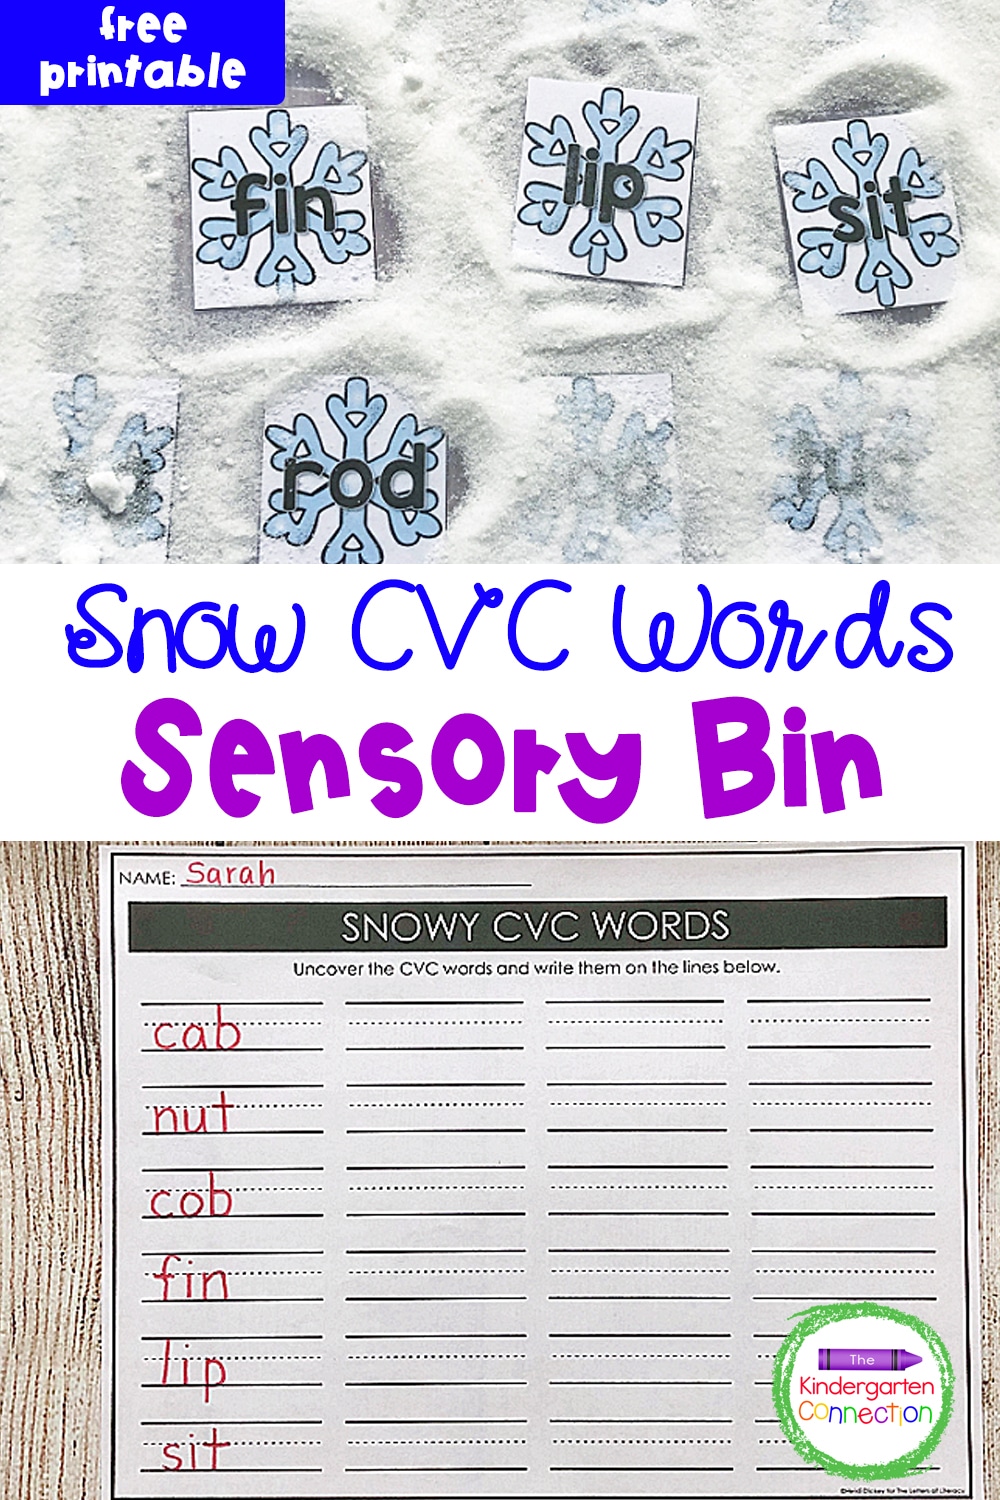 FREE Snow CVC Words Sensory Bin Printables for Winter Literacy Centers in Kindergarten!